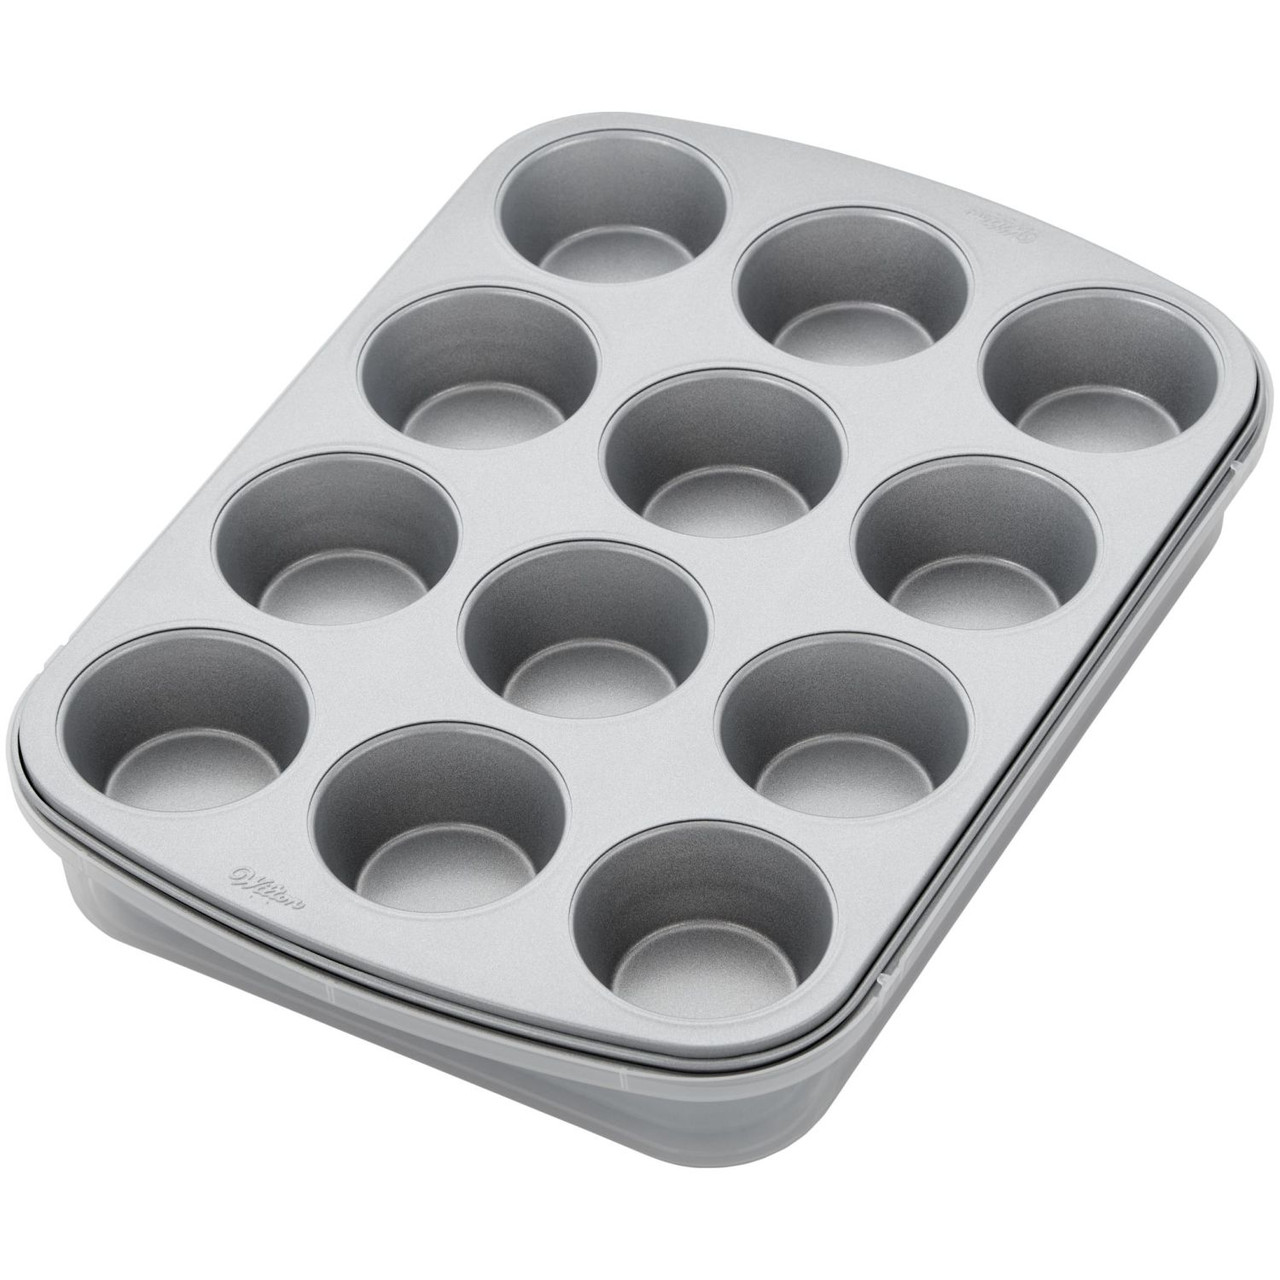 Baking Pans Sets Nonstick，5pcs Bakeware Sets with 12 Cup Cupcake Muffin  pan,Round/Square Cake Pan, Muffin Pan, Loaf Pan, Roast Pan, Baking Sheets  for